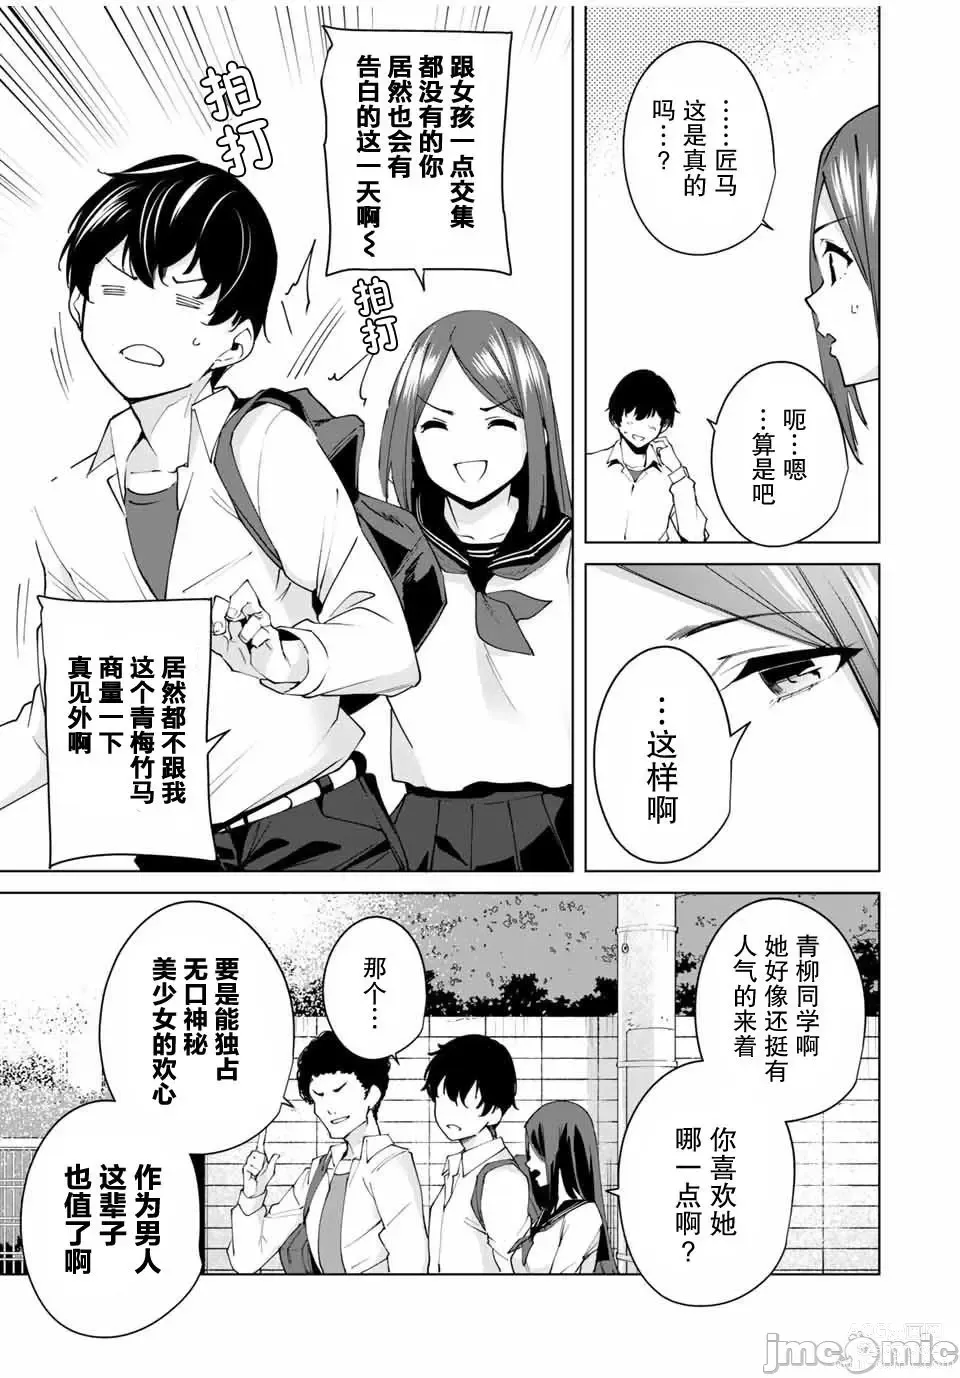 Page 7 of manga 命運戀人 Destiny Lovers 【汉化版】1